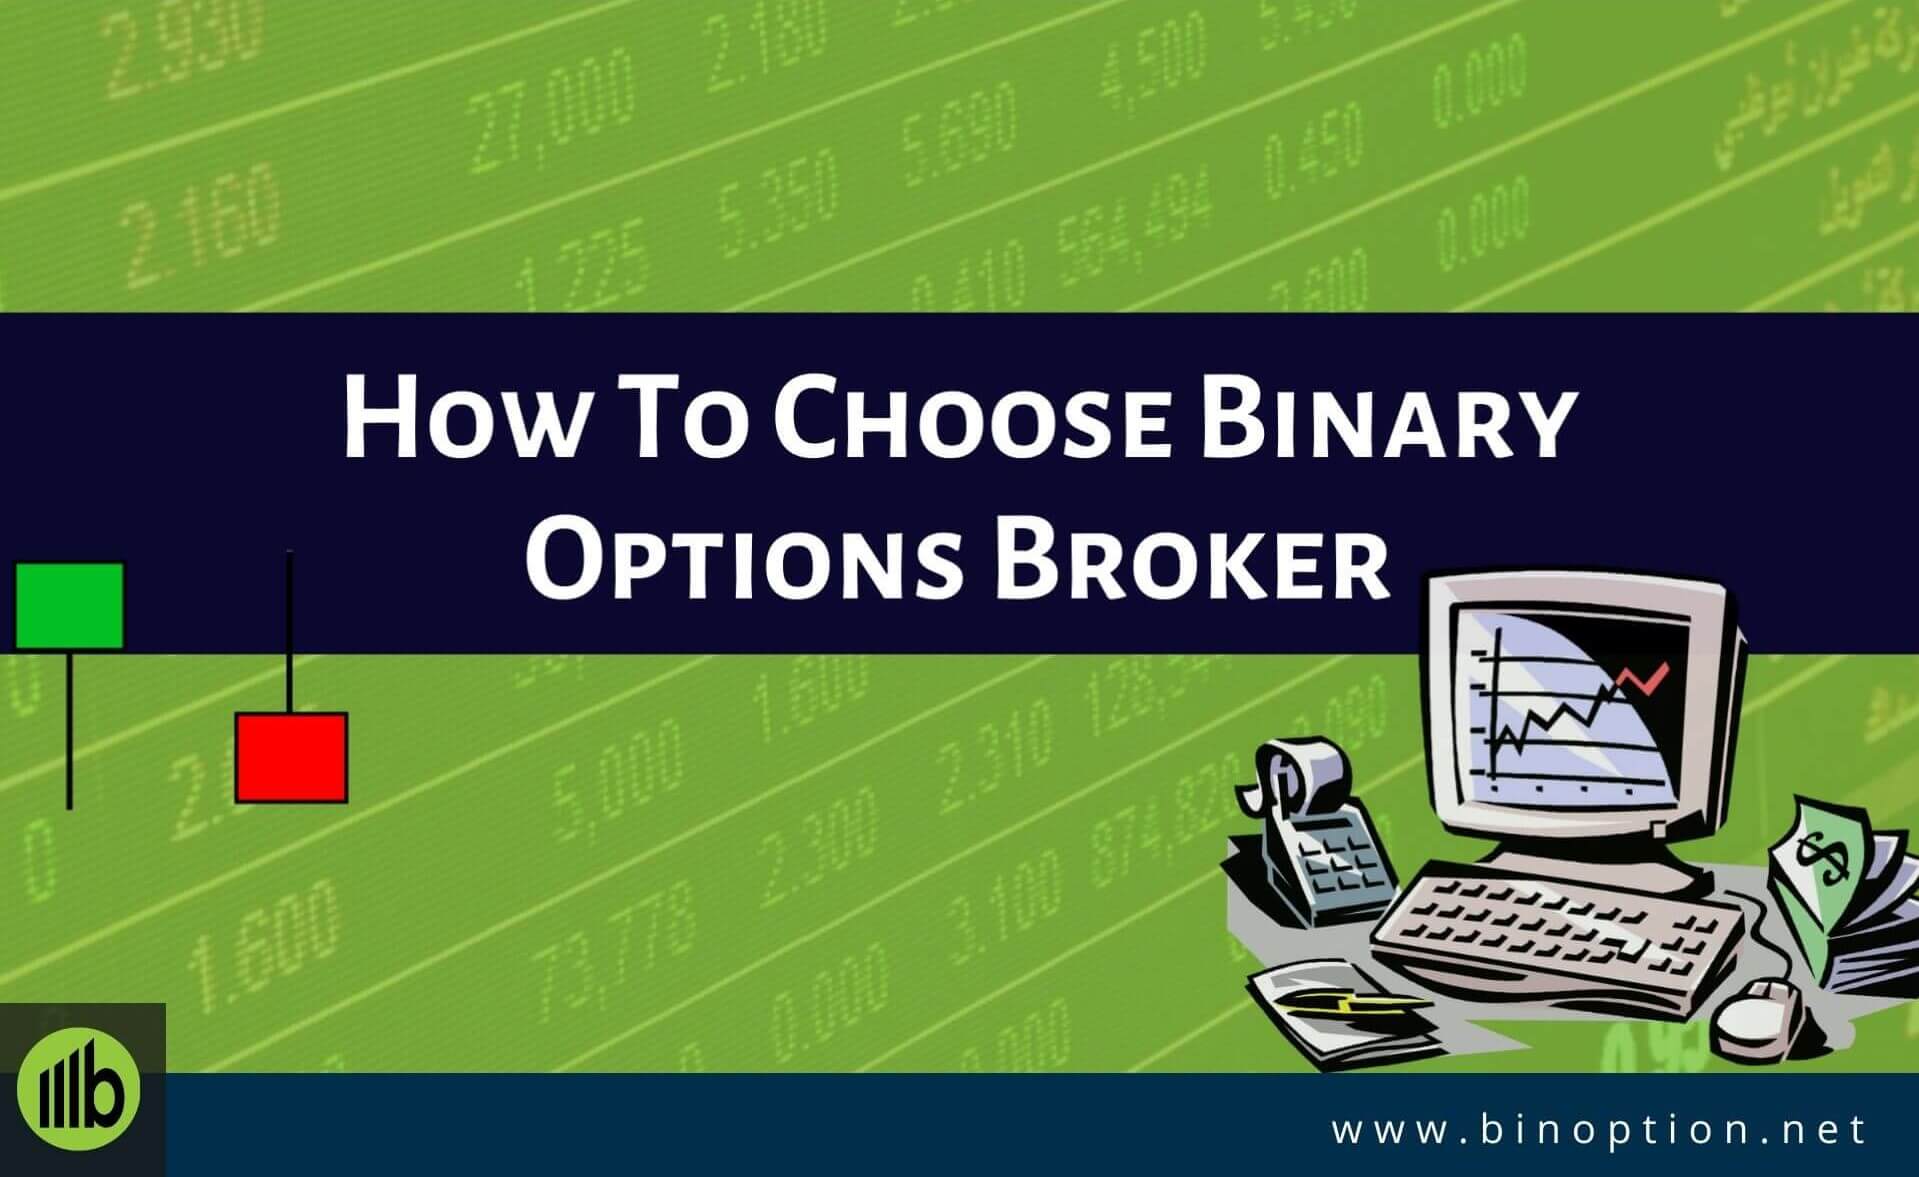 Choosing a binary option trinet group ipo